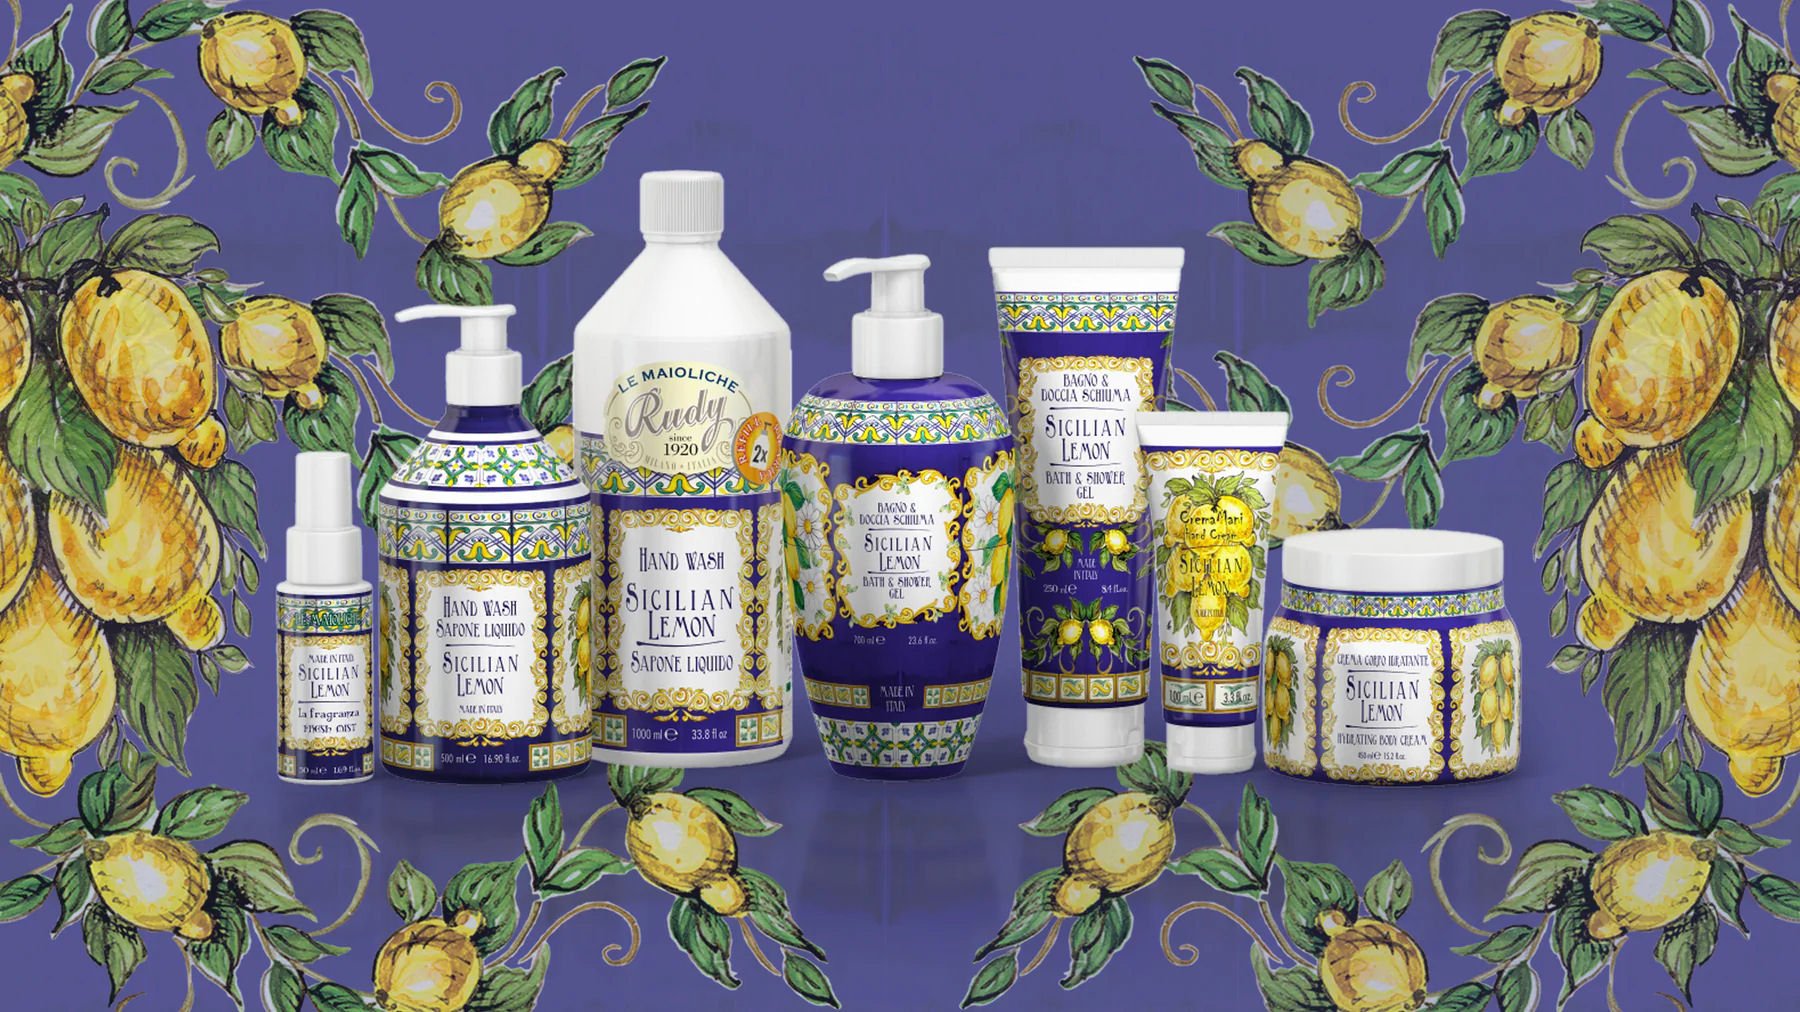 Rudy Profumi Sicilian Lemon Body Cream - |VESIMI Design| Luxury and Rustic bathrooms online